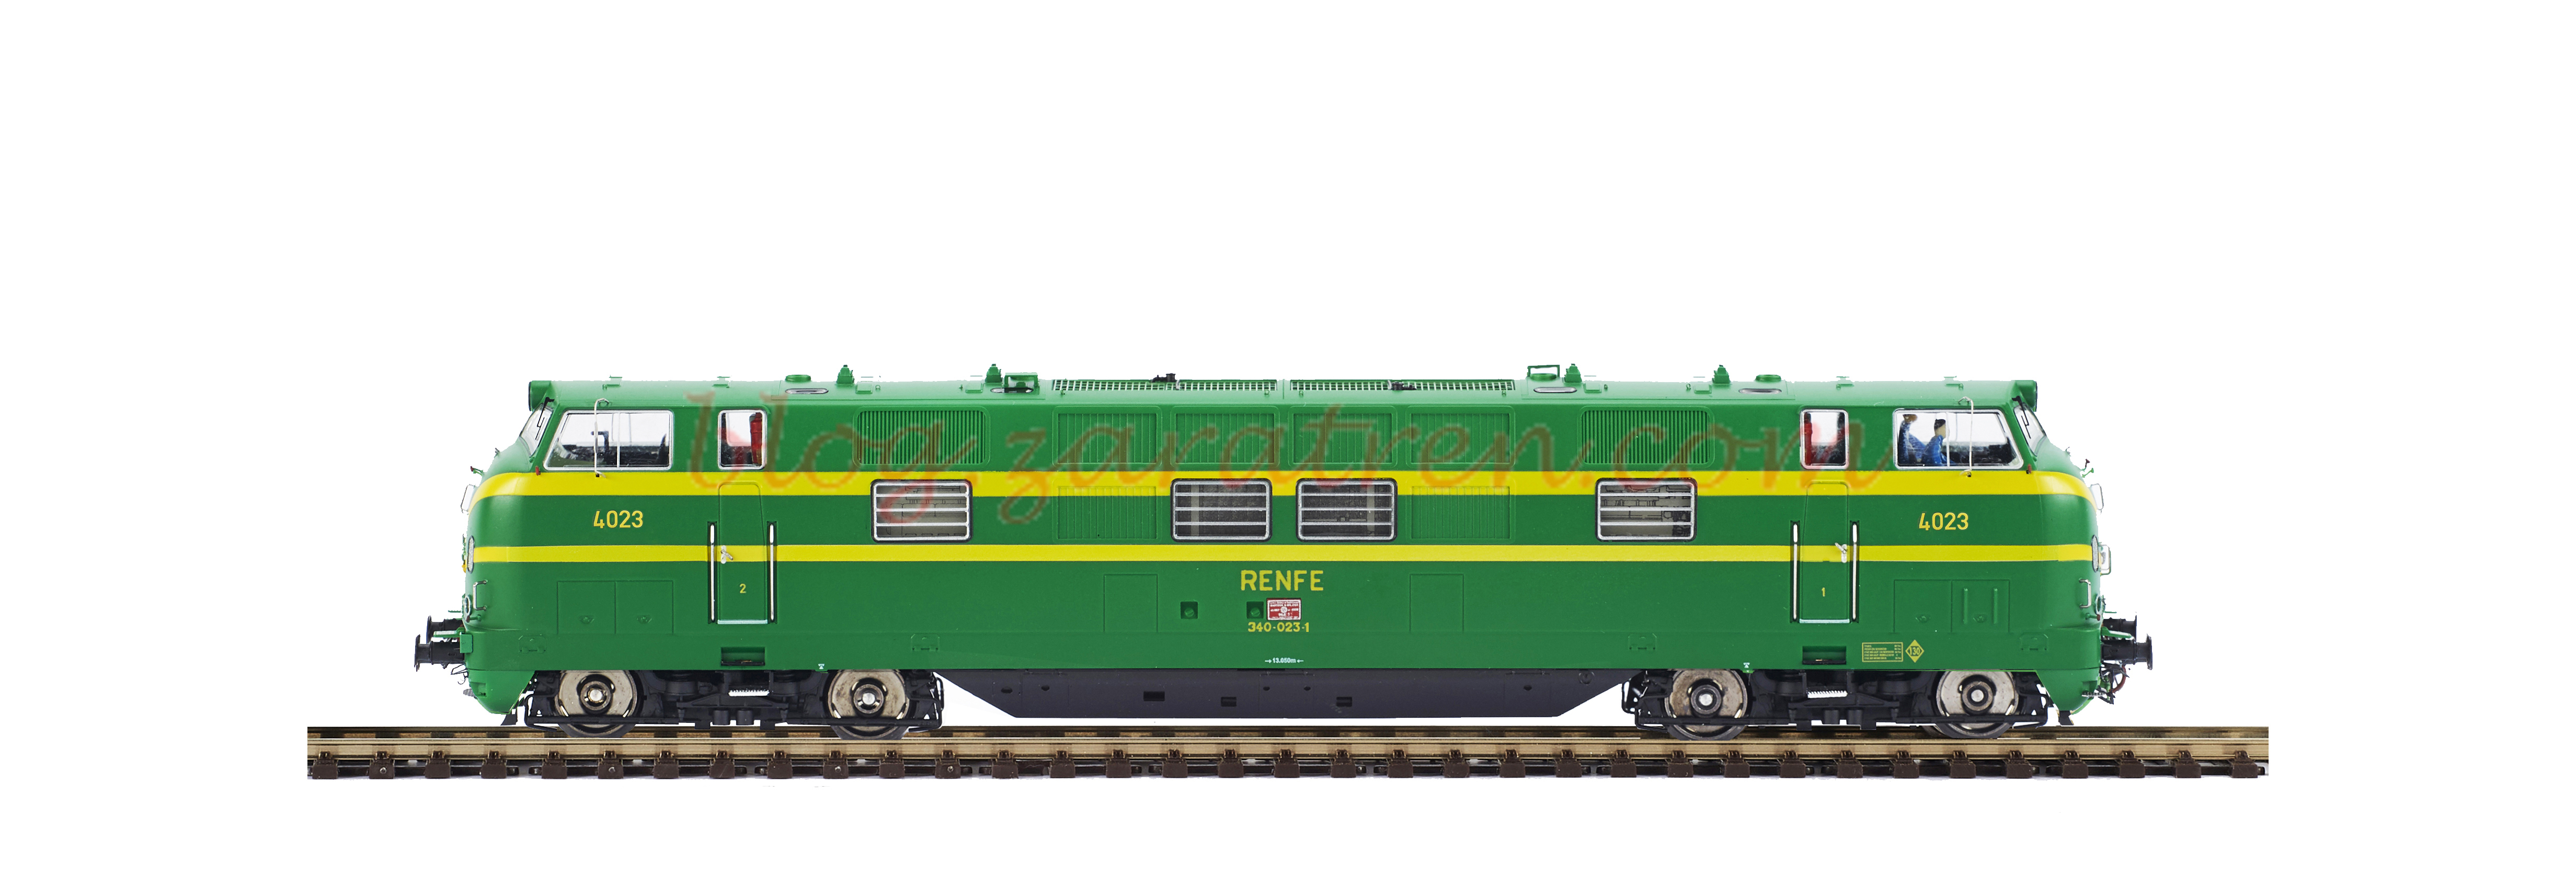 Mabar – Locomotora Diesel 4023, Serie limitada, Matricula (2-3)40-023-1, UIC, Epoca IV, Escala H0, Analogica, Ref: 81583.